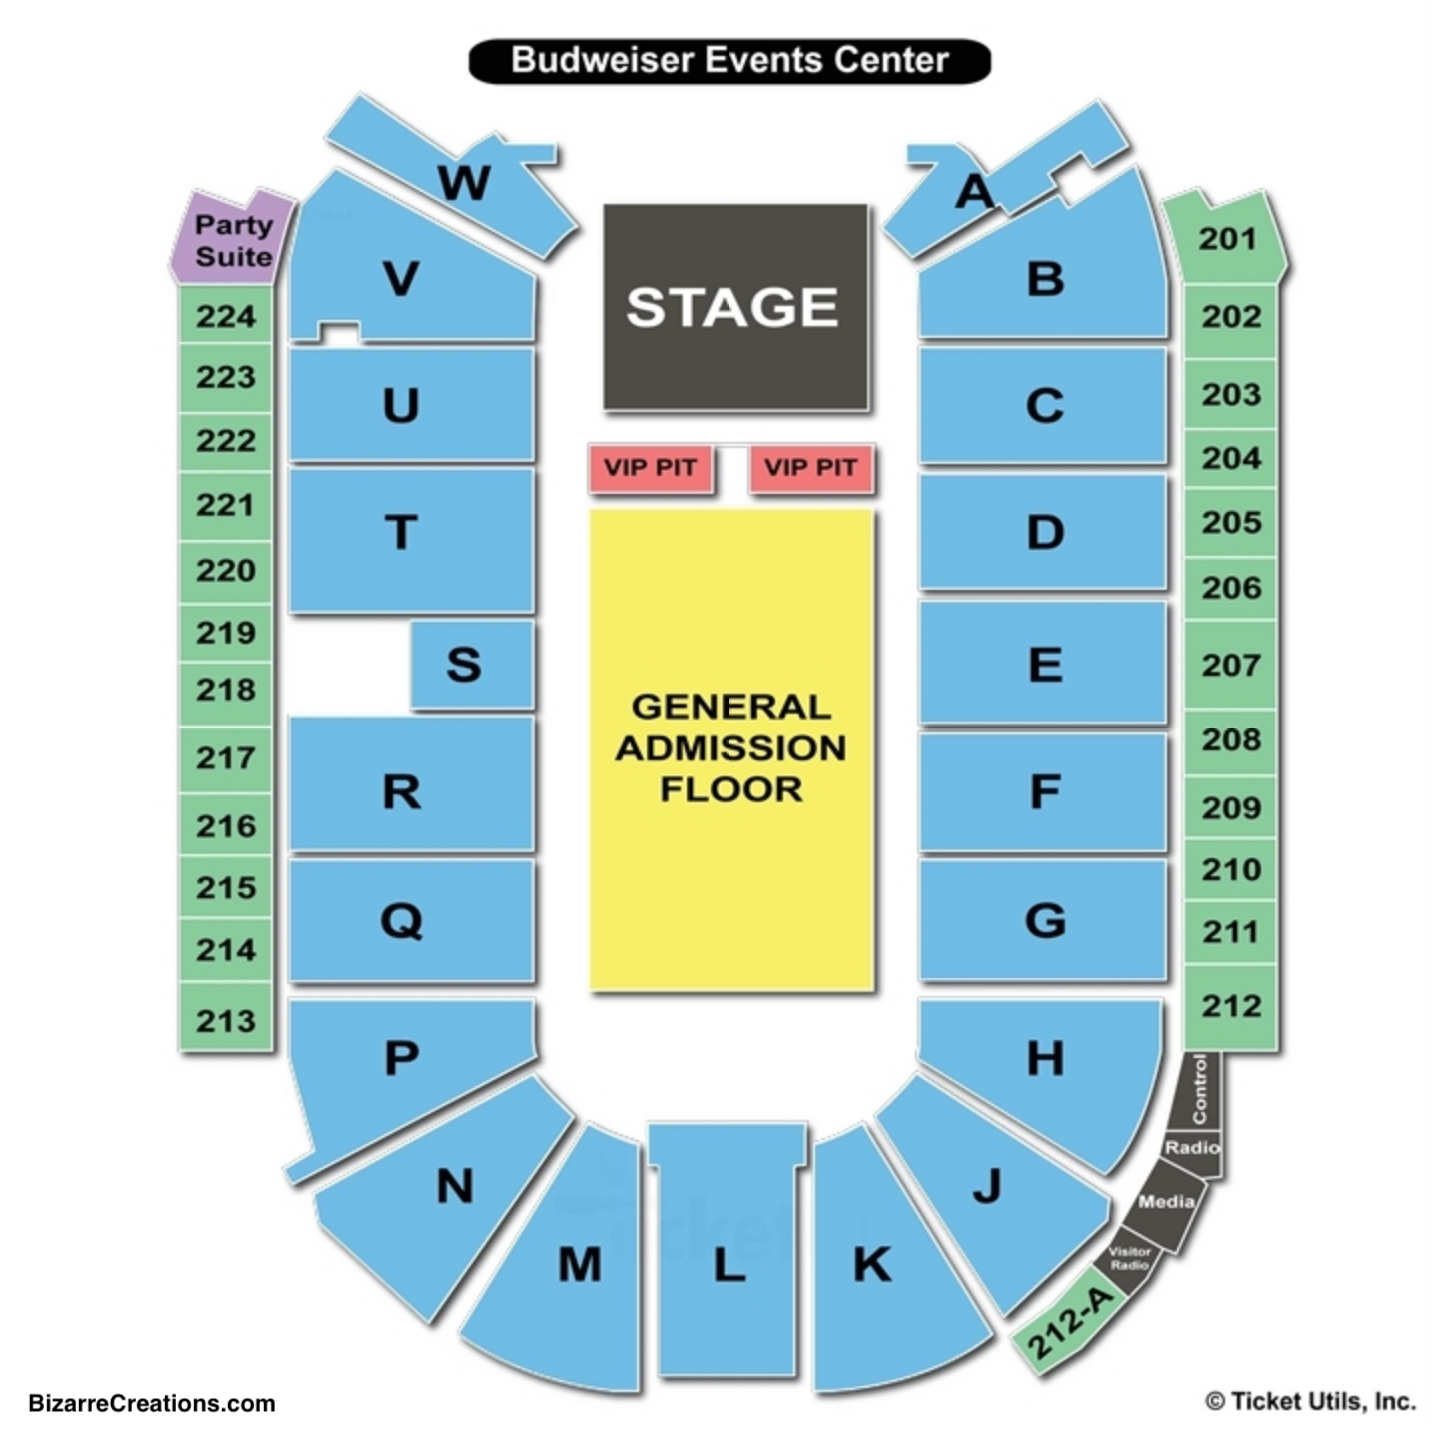 Budweiser Events Center Concert Seating Chart.